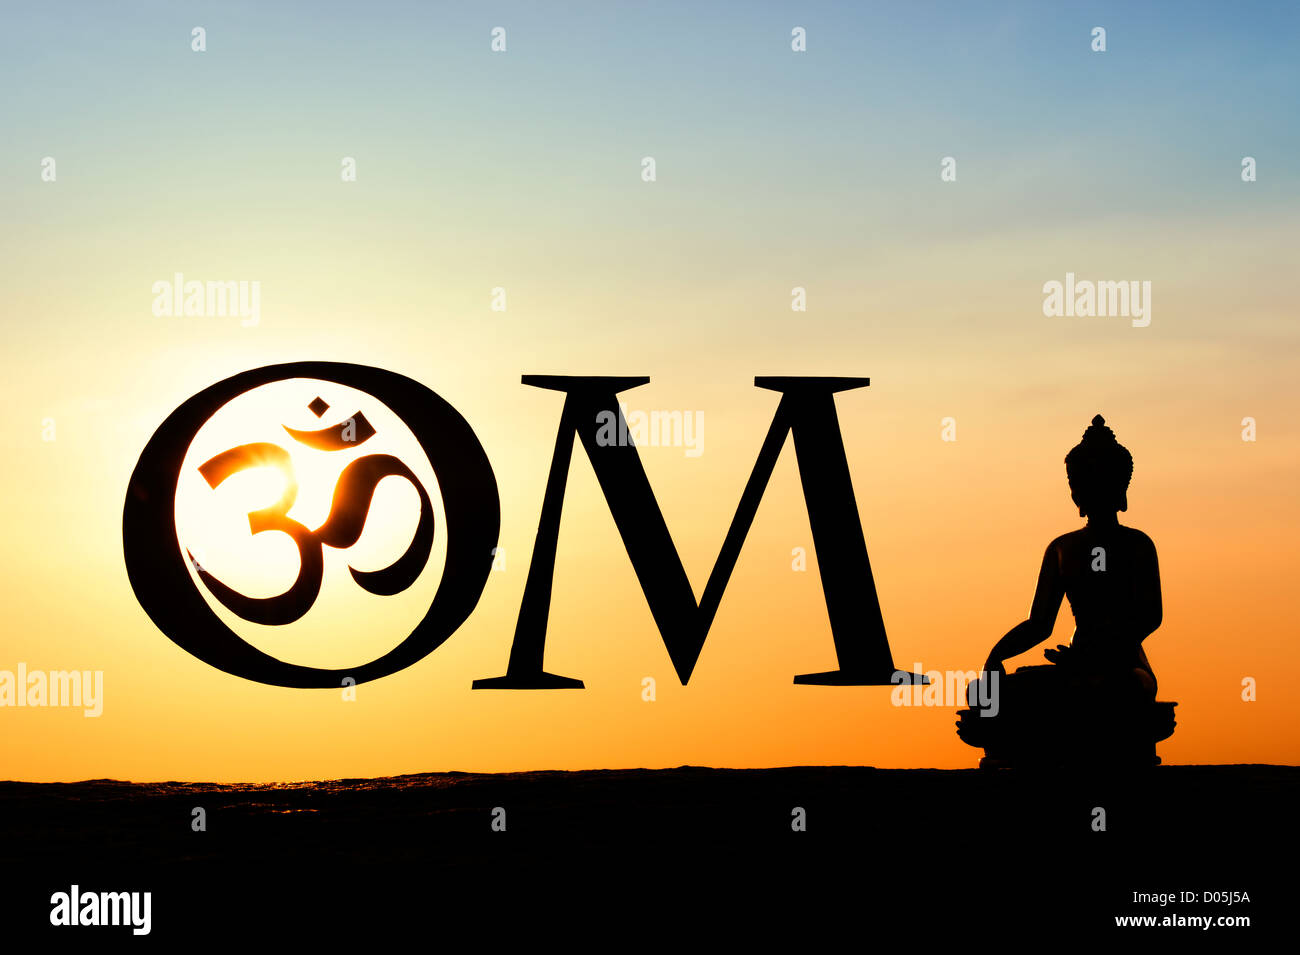 Hindu OM / AUM symbol and silhouette Buddha at sunset. India Stock Photo